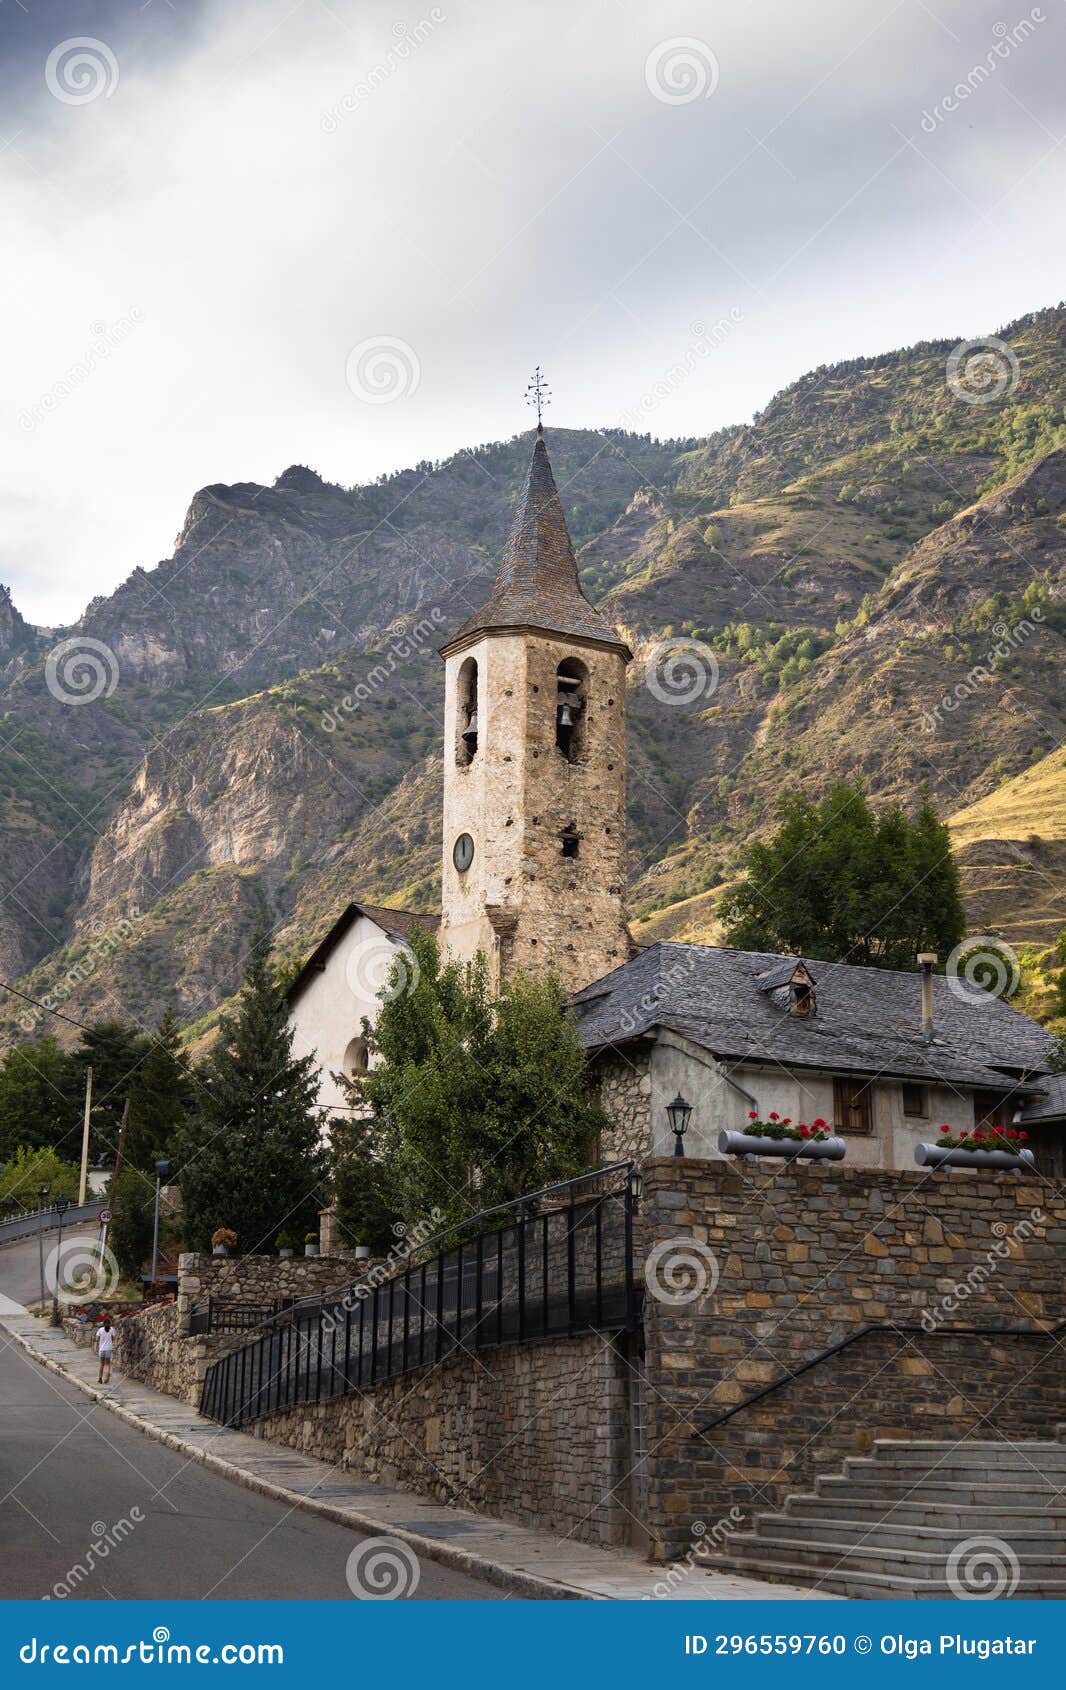 church of santa llogaia in the small village of espot in summer, pyrenees